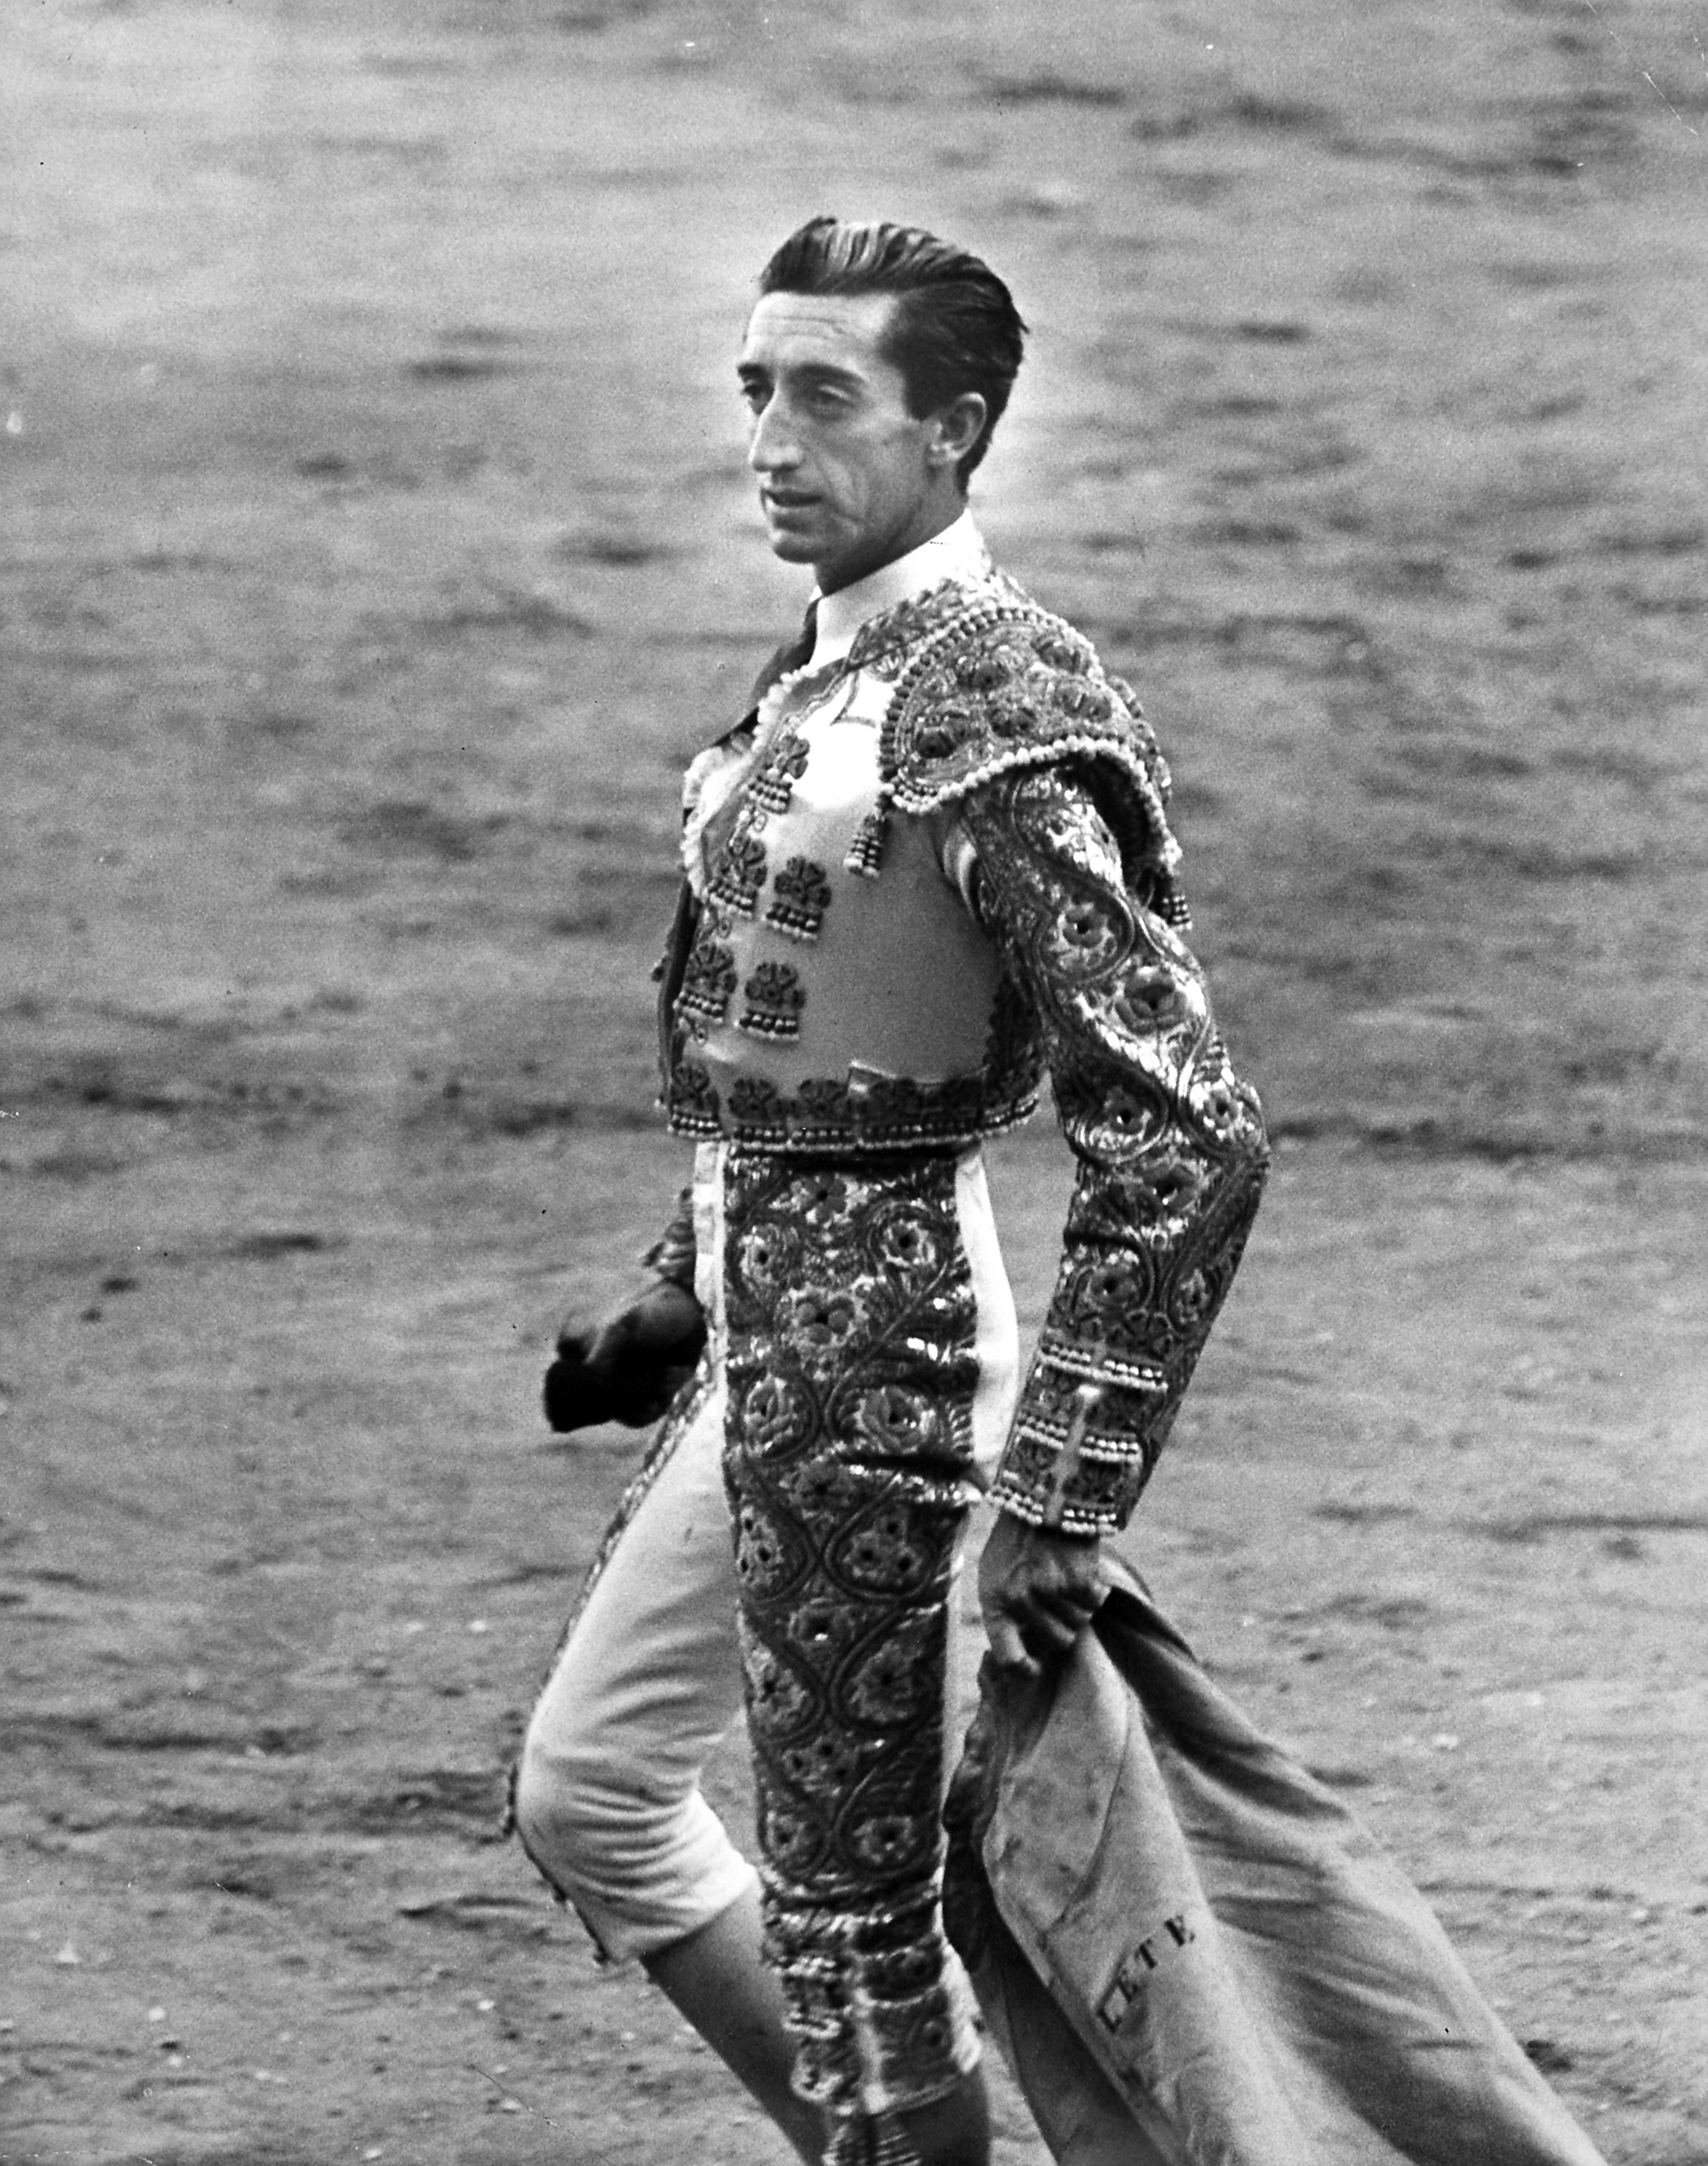 Famous bullfighter Manolete during the festival of San Fermín, 1947.